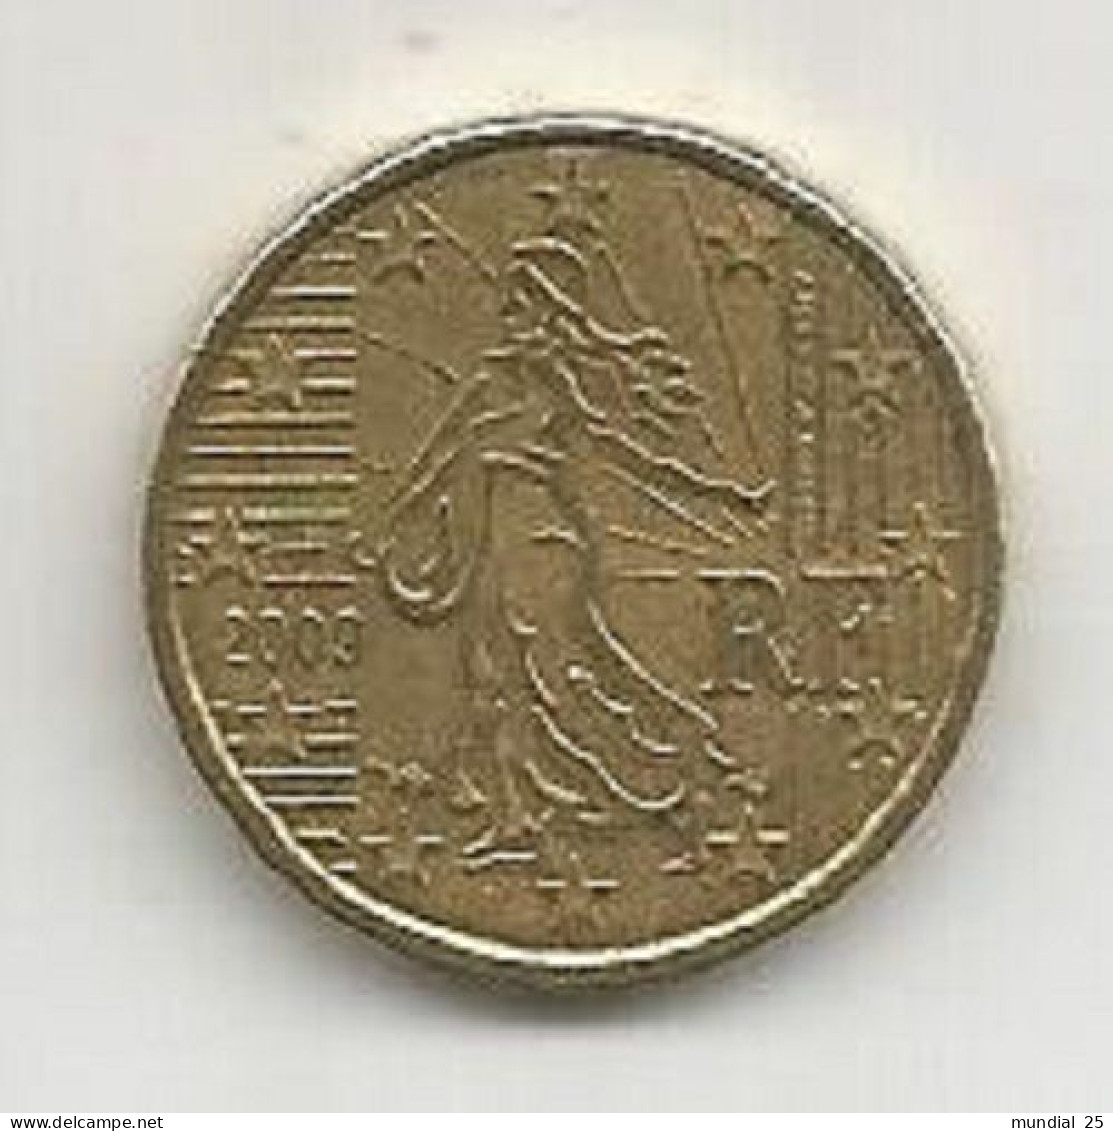 FRANCE 10 EURO CENT 2009 - Frankreich